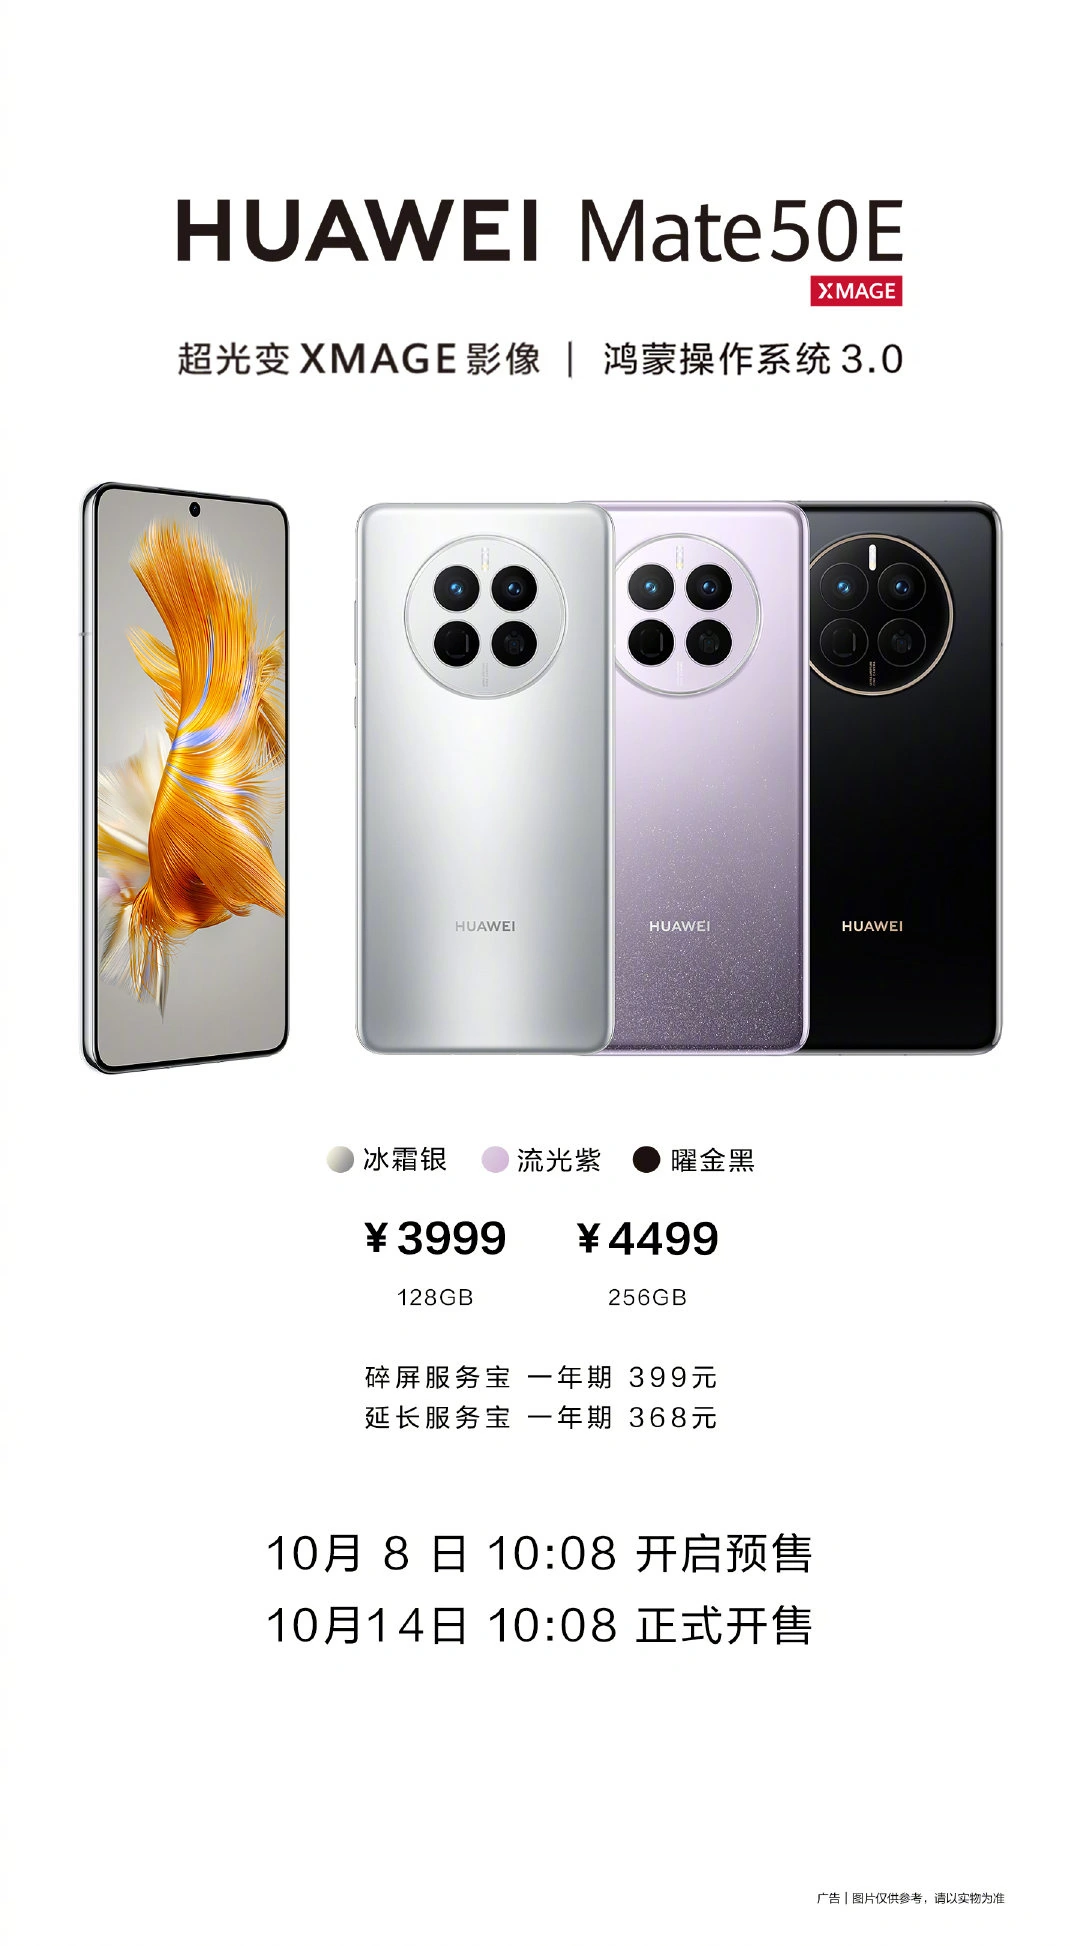 Huawei Mate 50E Sale in China